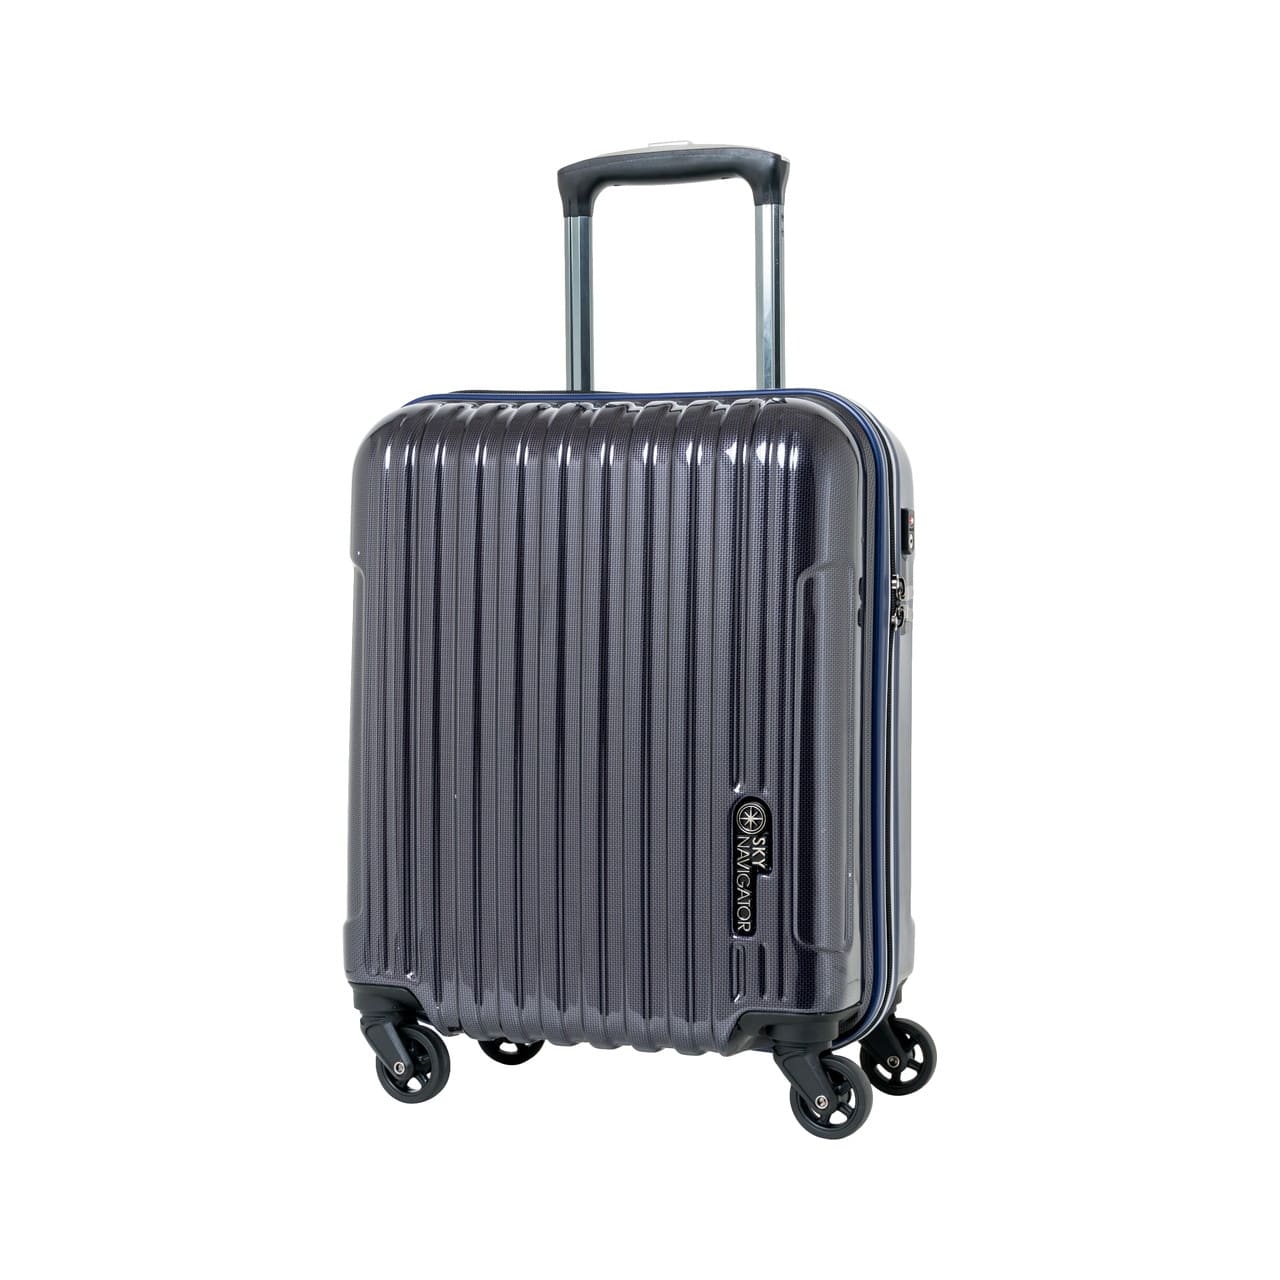 SKYNAVIGATORのスーツケースSK-0722-41のネイビーカーボンの正面振り画像